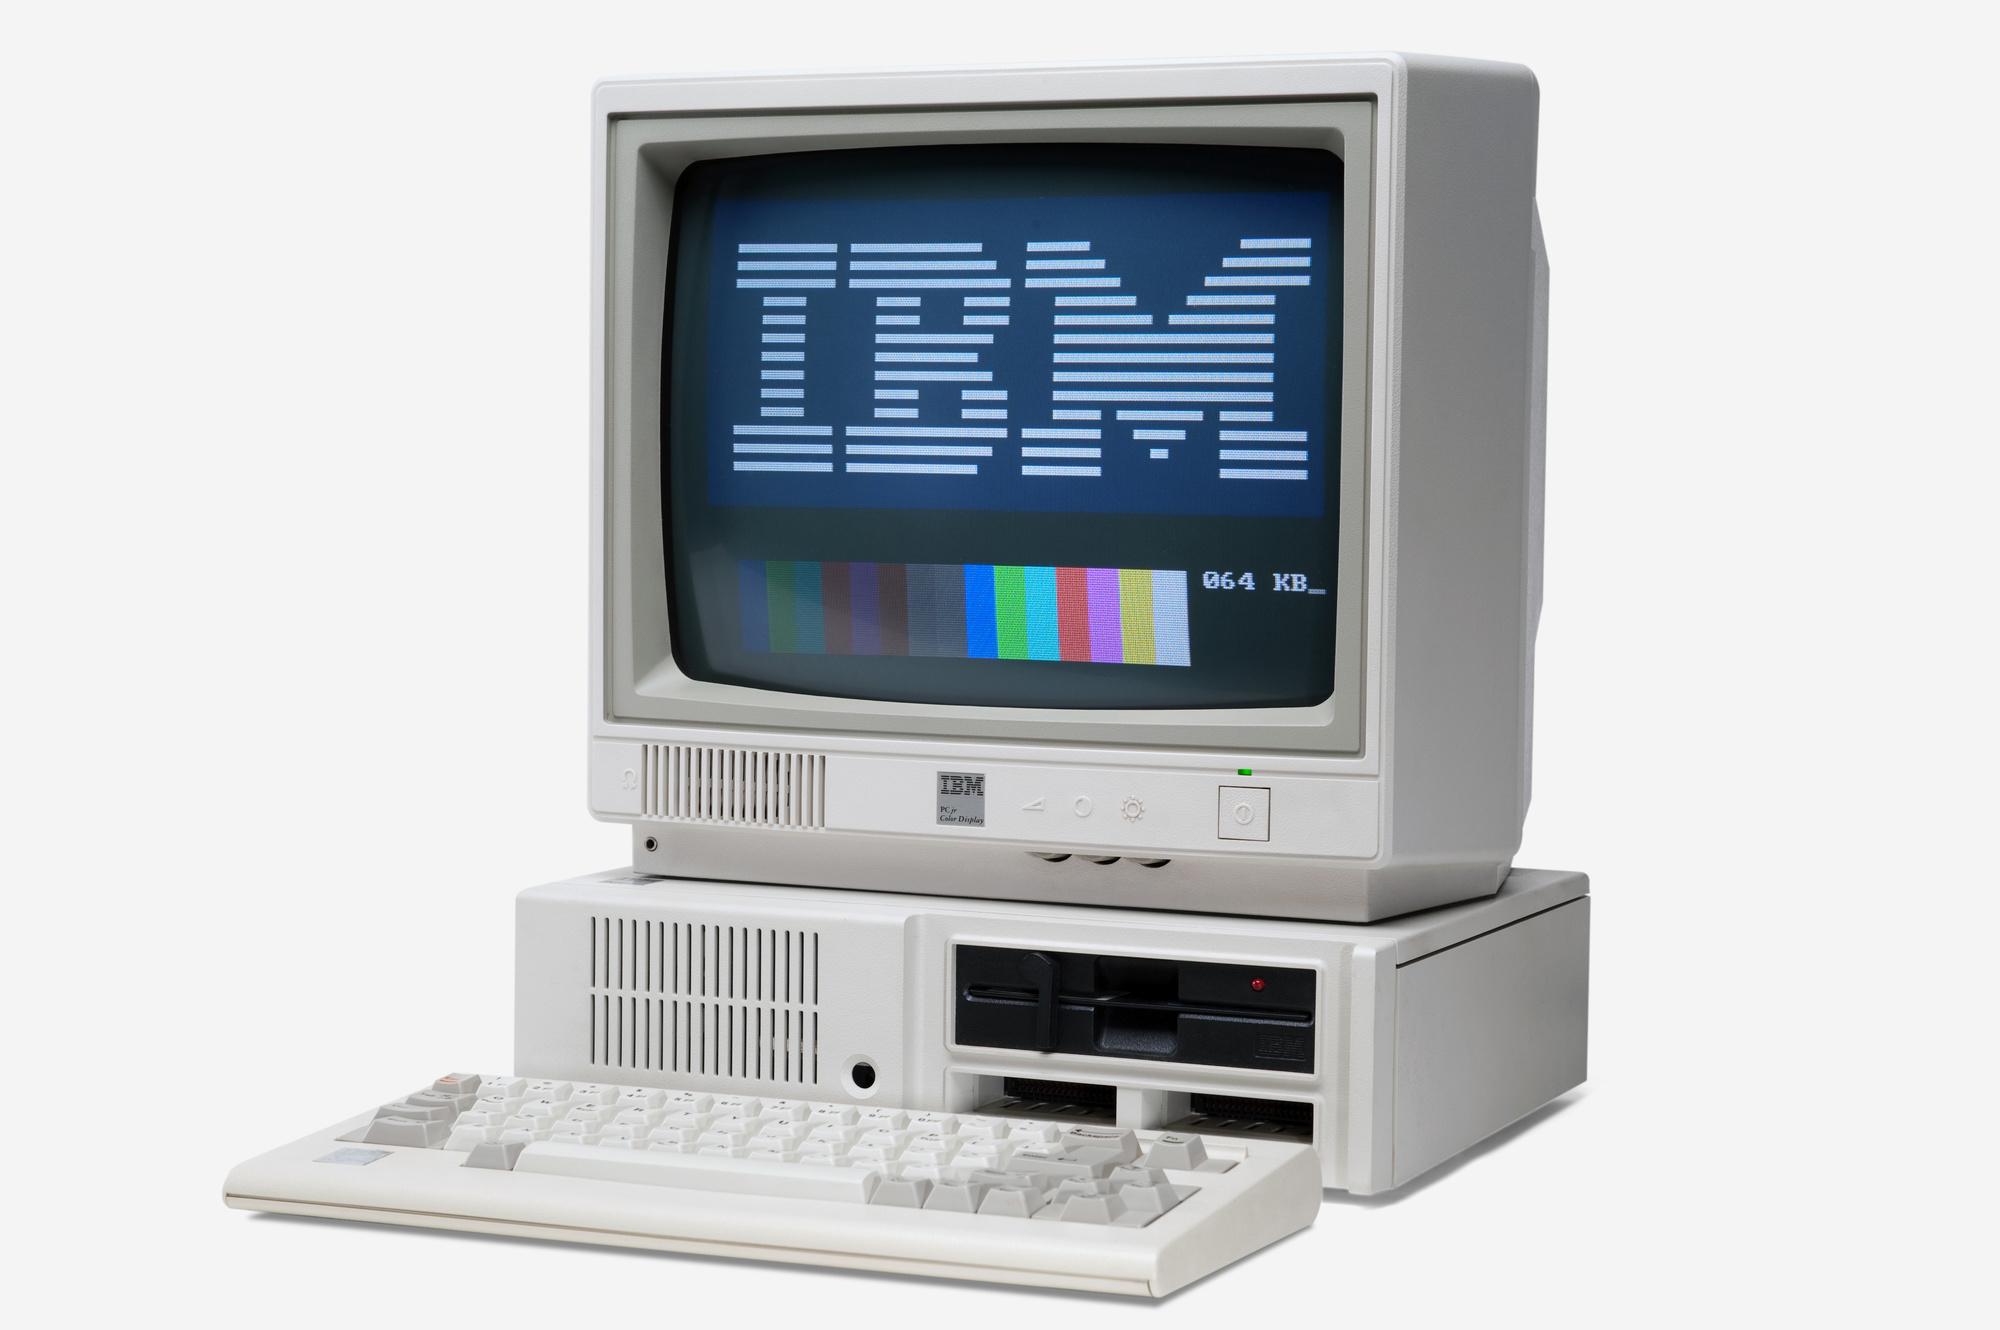 De IBM PCjr home computer uit 1984-1985.